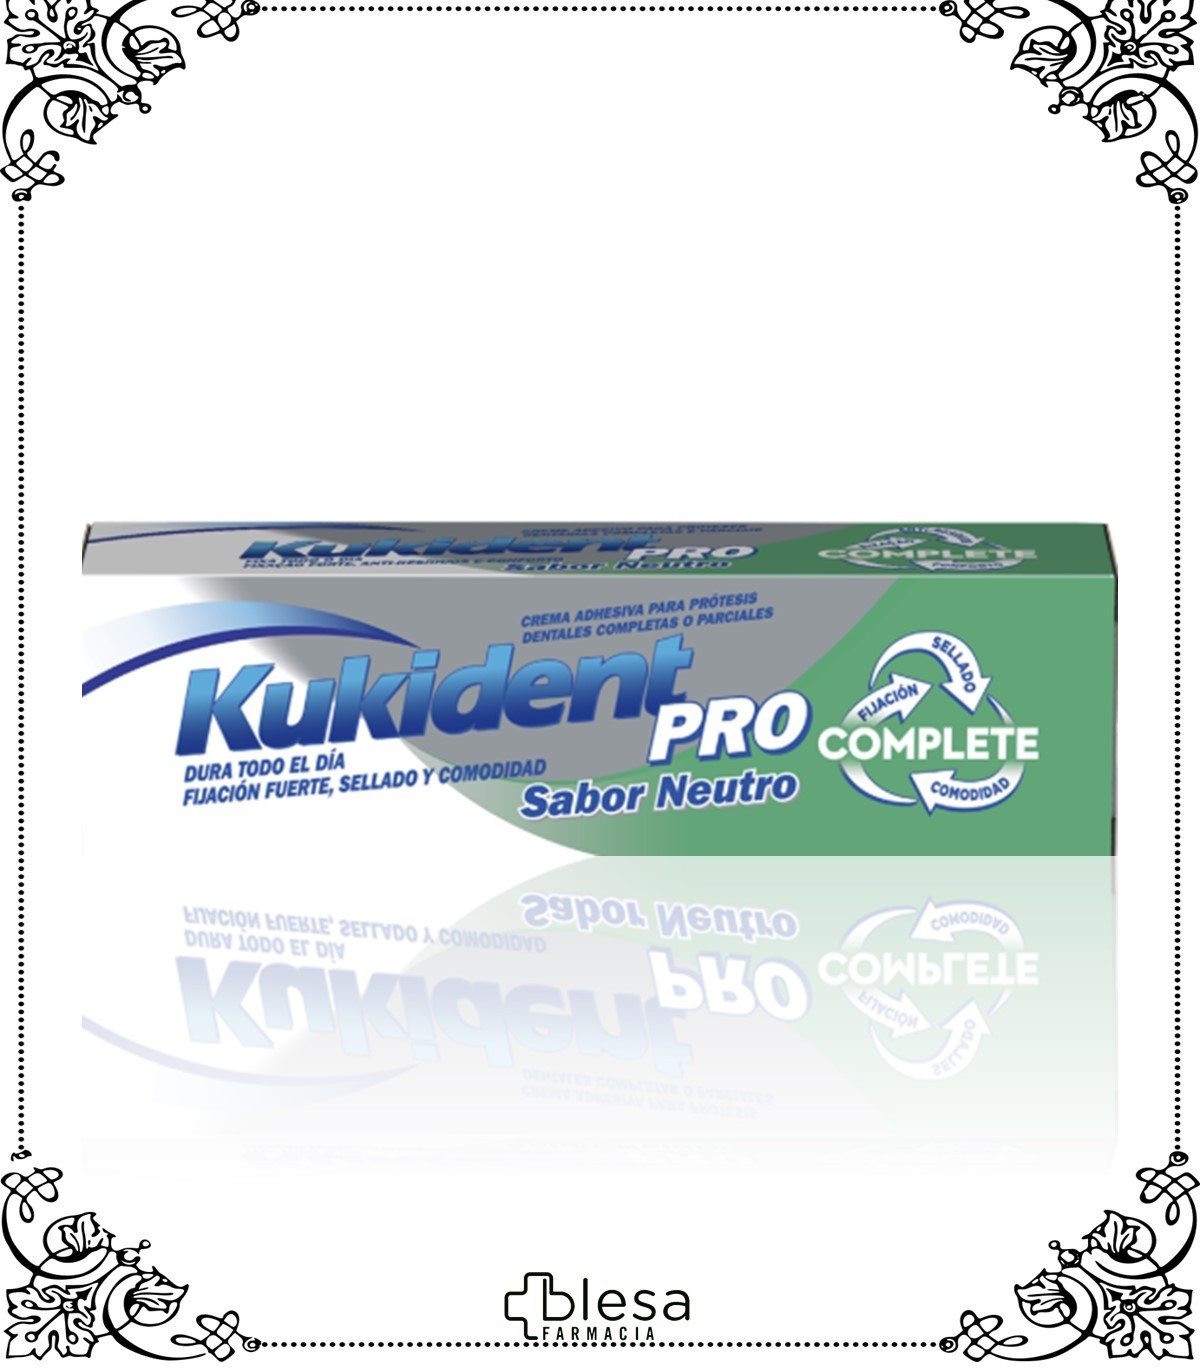 Procter & Gamble kukident pro-complete neutro 70 gr - Blesa Farmacia